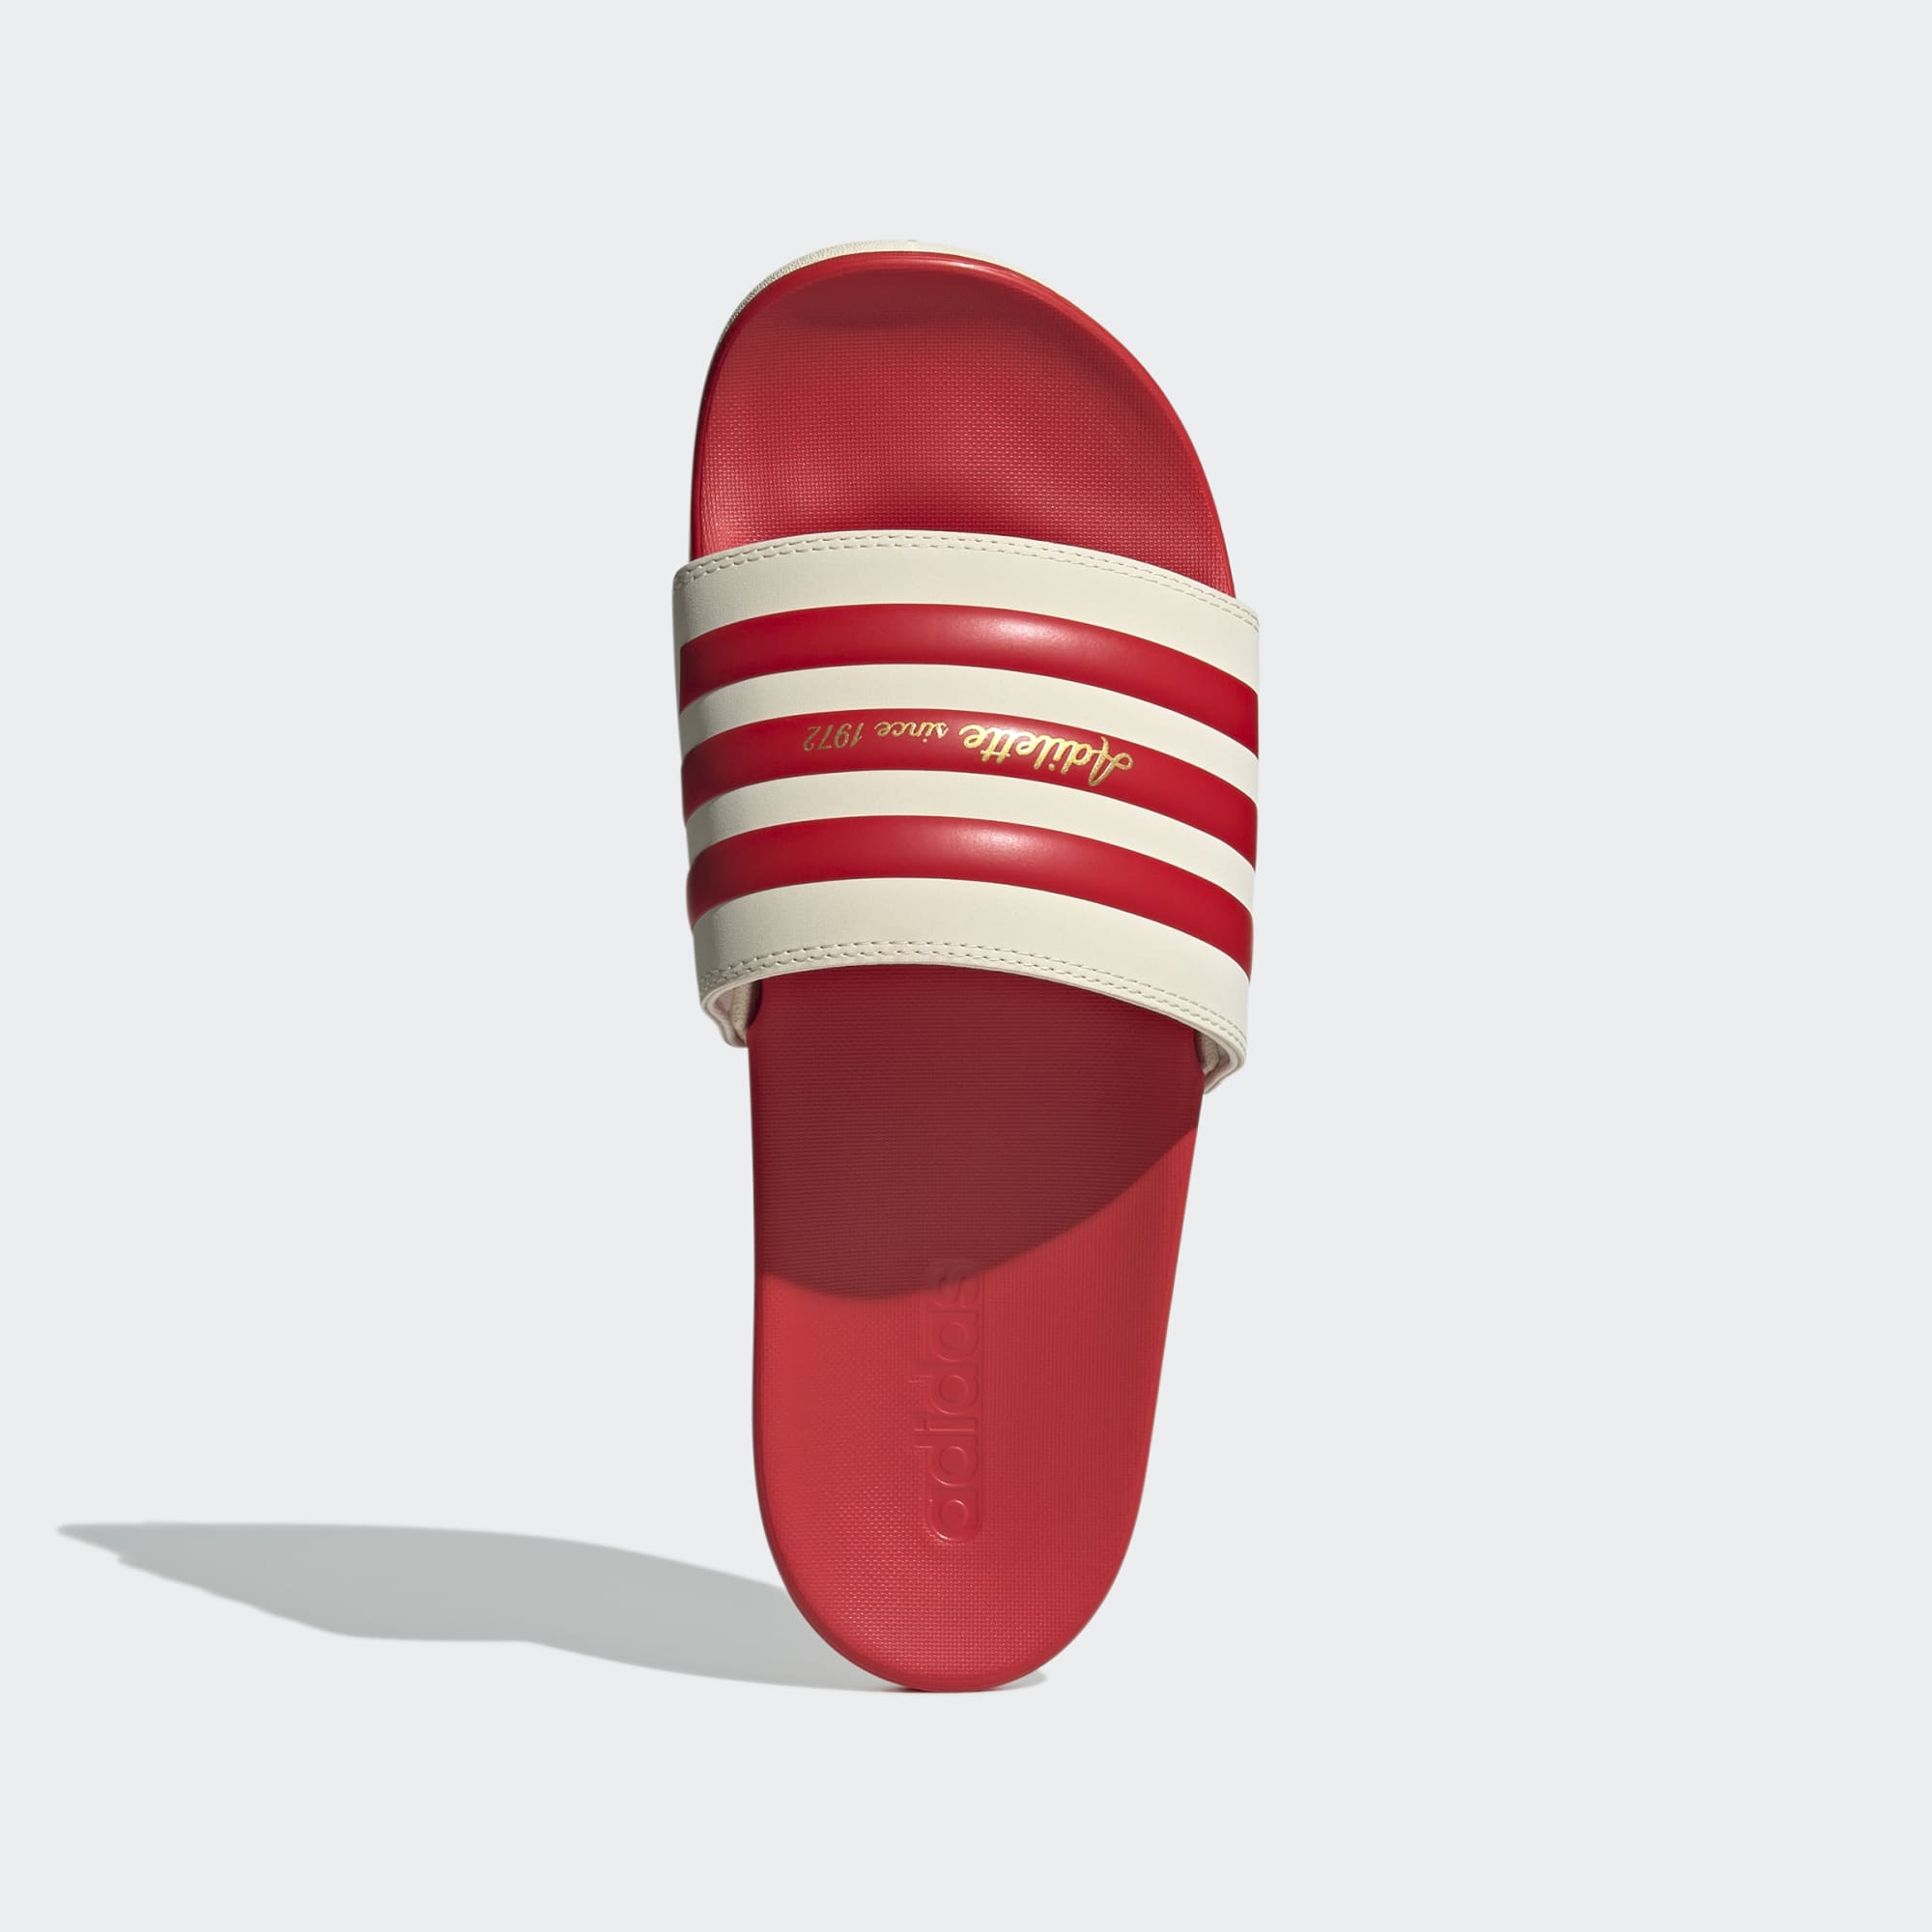 Stefans / Adilette Vivid / - Wisconsin Wonder Metallic Comfort Gold - - White Slides adidas Red Soccer